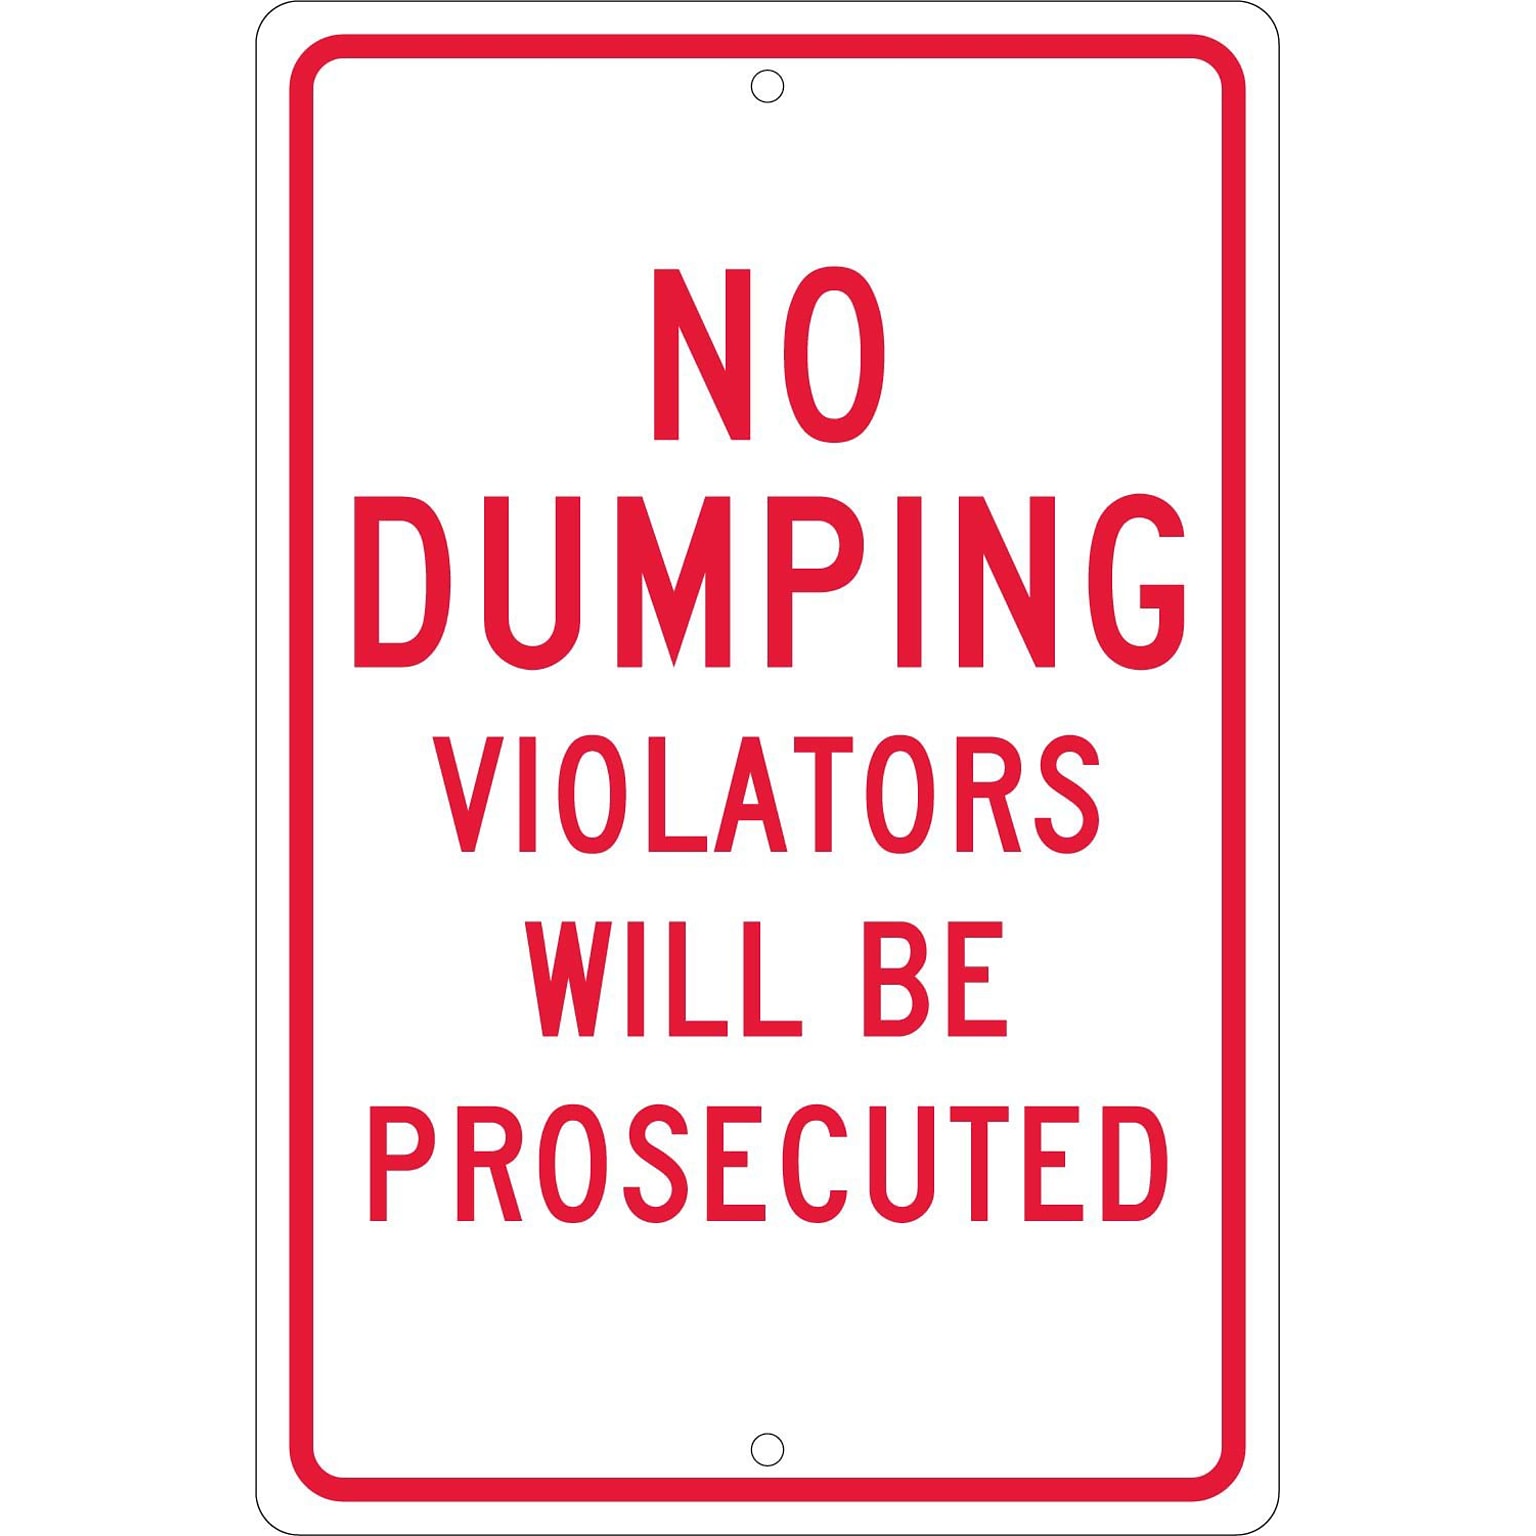 National Marker Reflective No Dumping Violators Will Be Prosecuted Warning Traffic Control Sign, 18 x 12, Aluminum (TM140H)